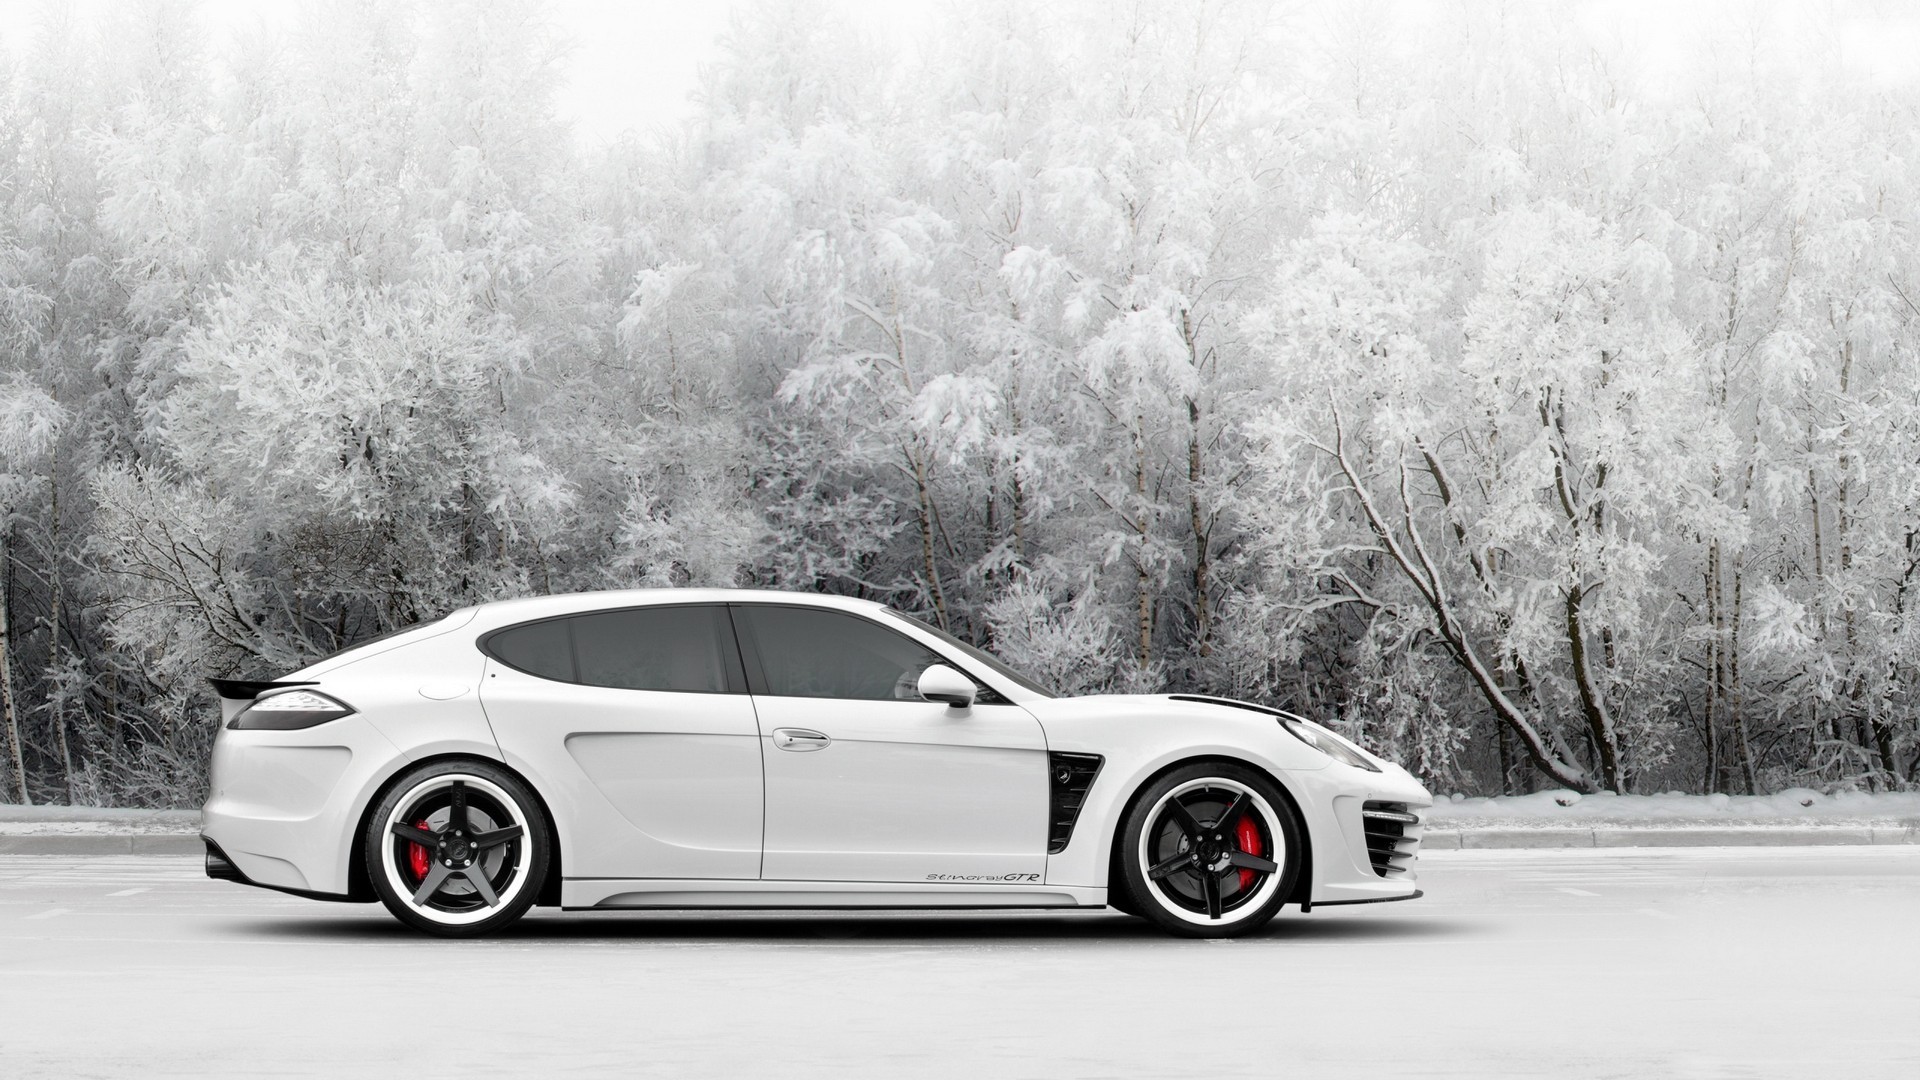 Porsche Panamera, Snow, Car Wallpaper